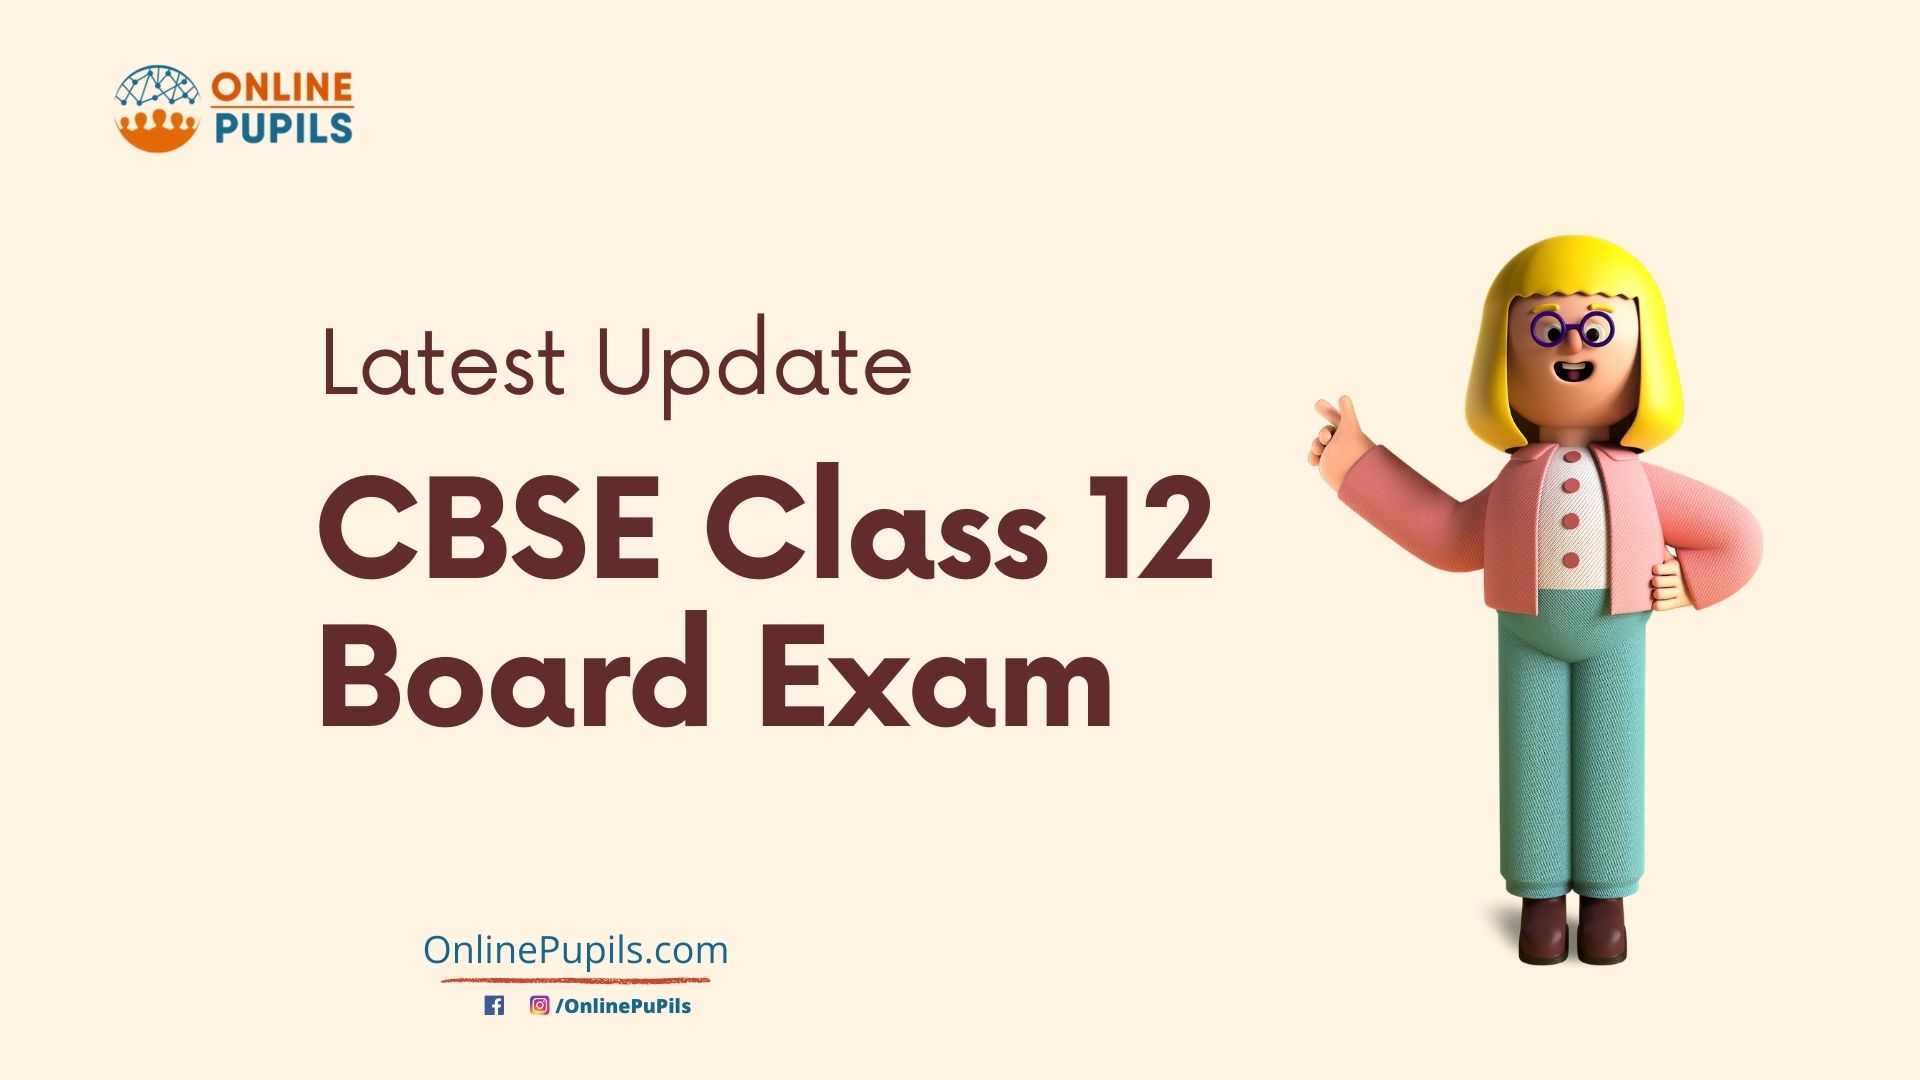 CBSE Class 12 Board Exam